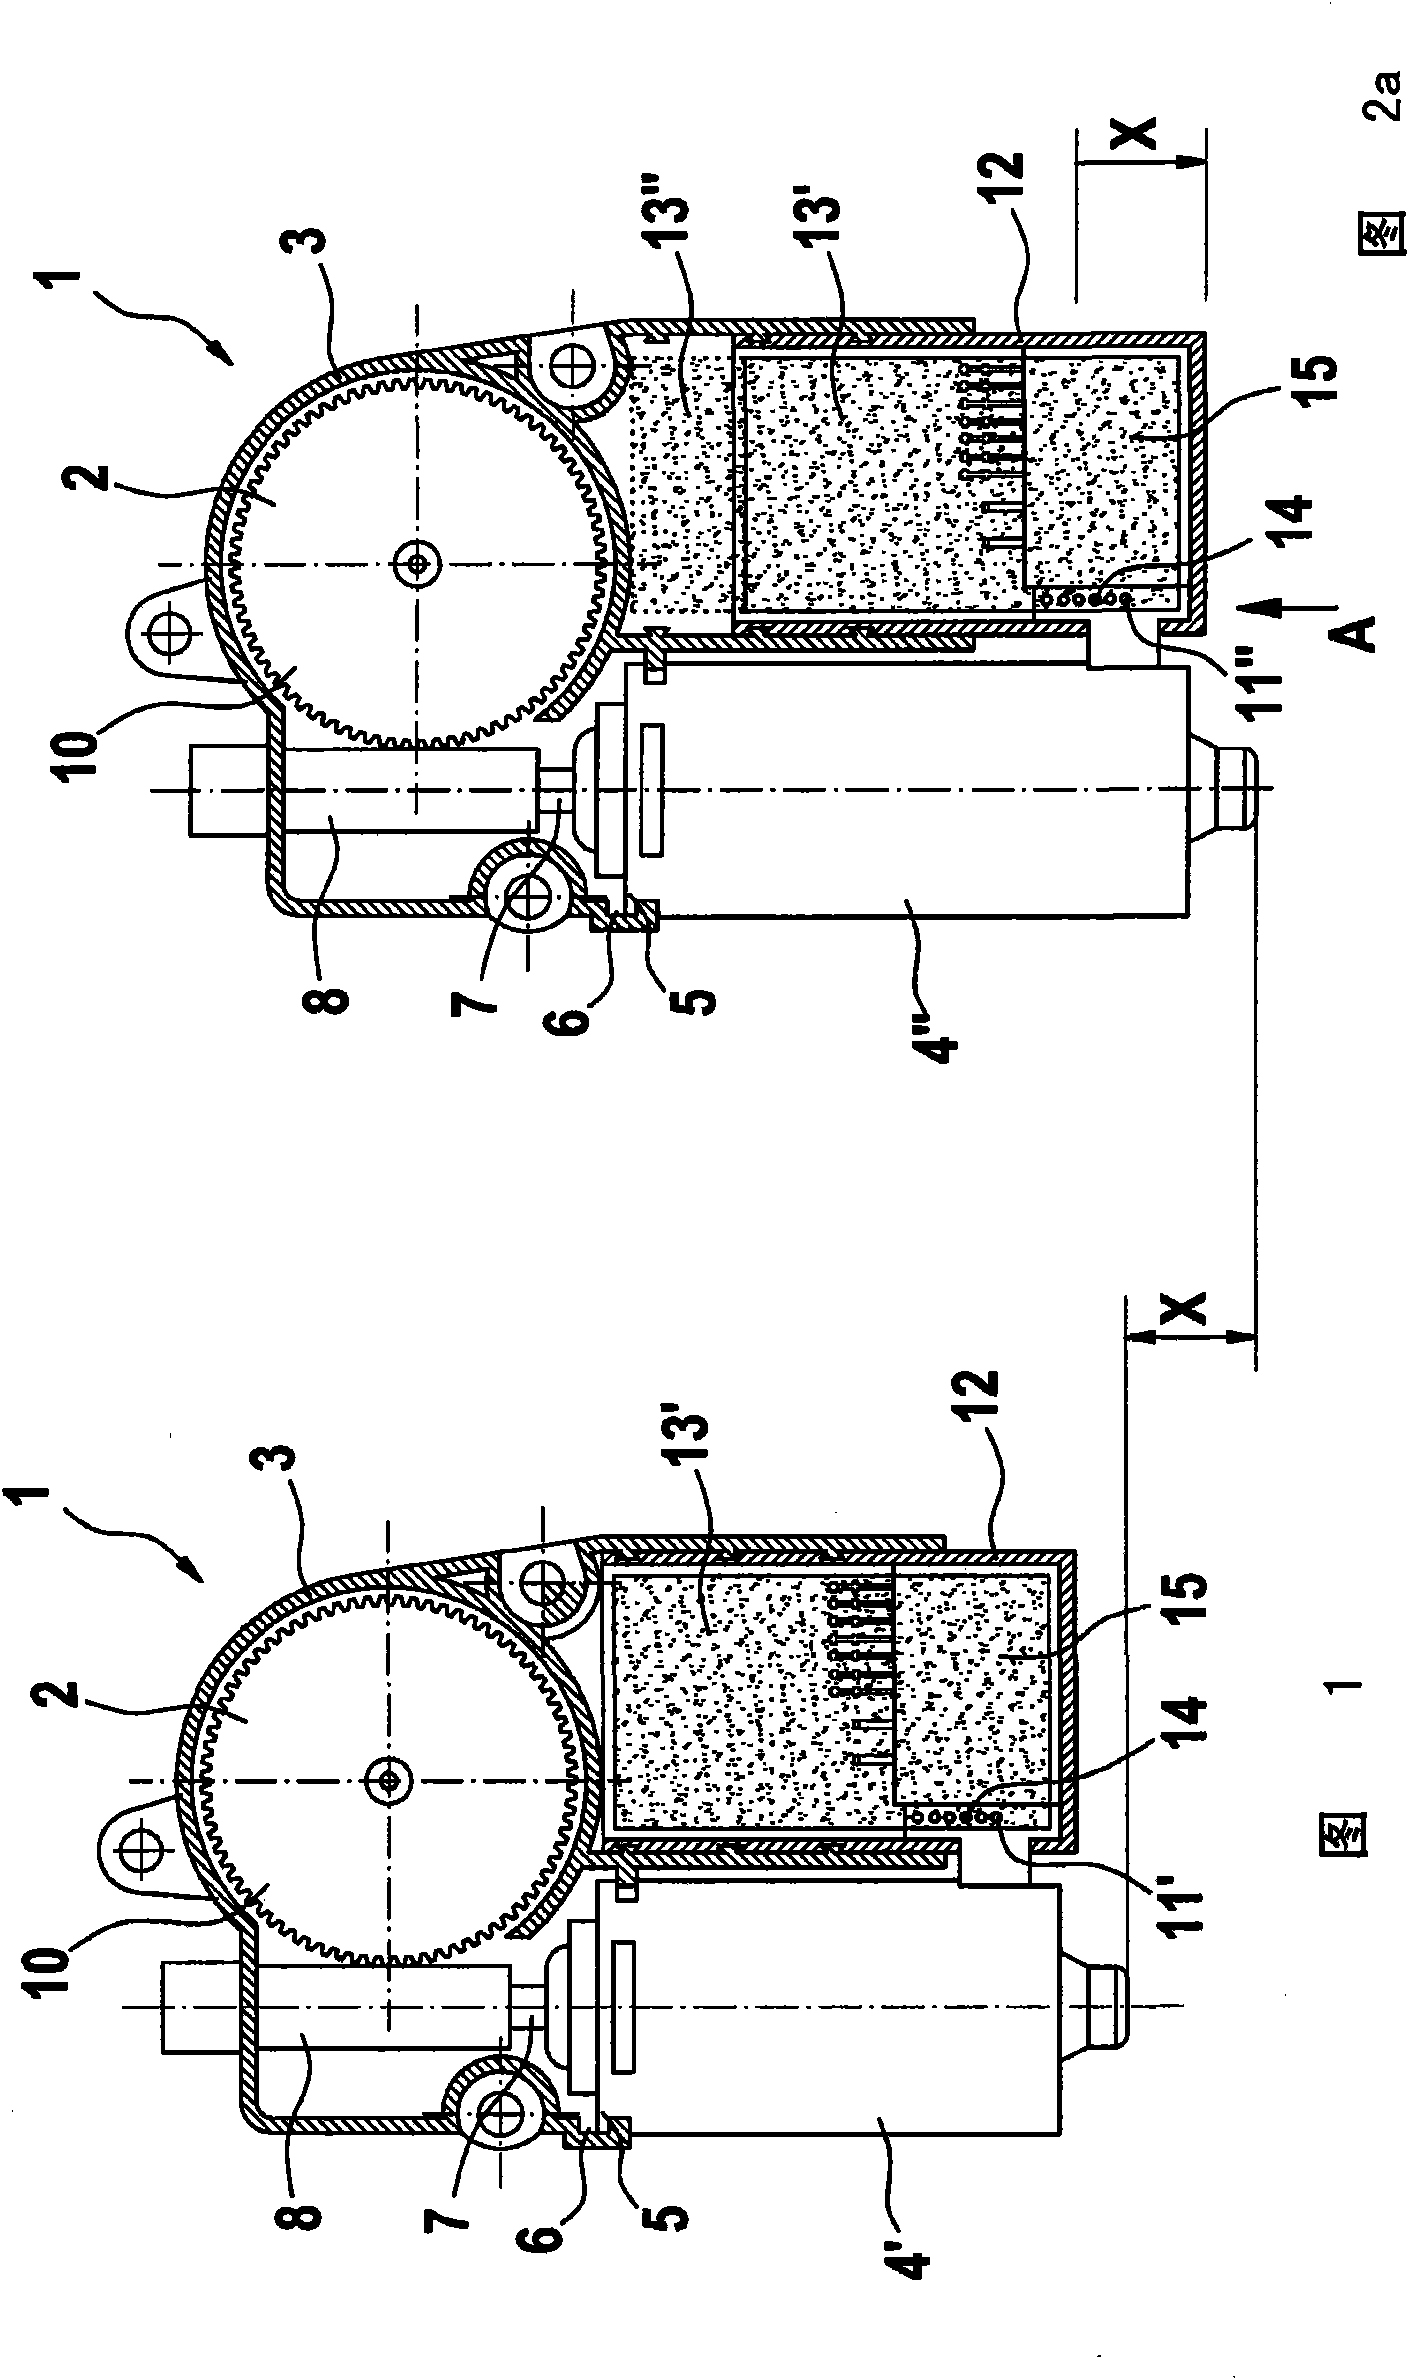 Motor/transmission unit and modular system